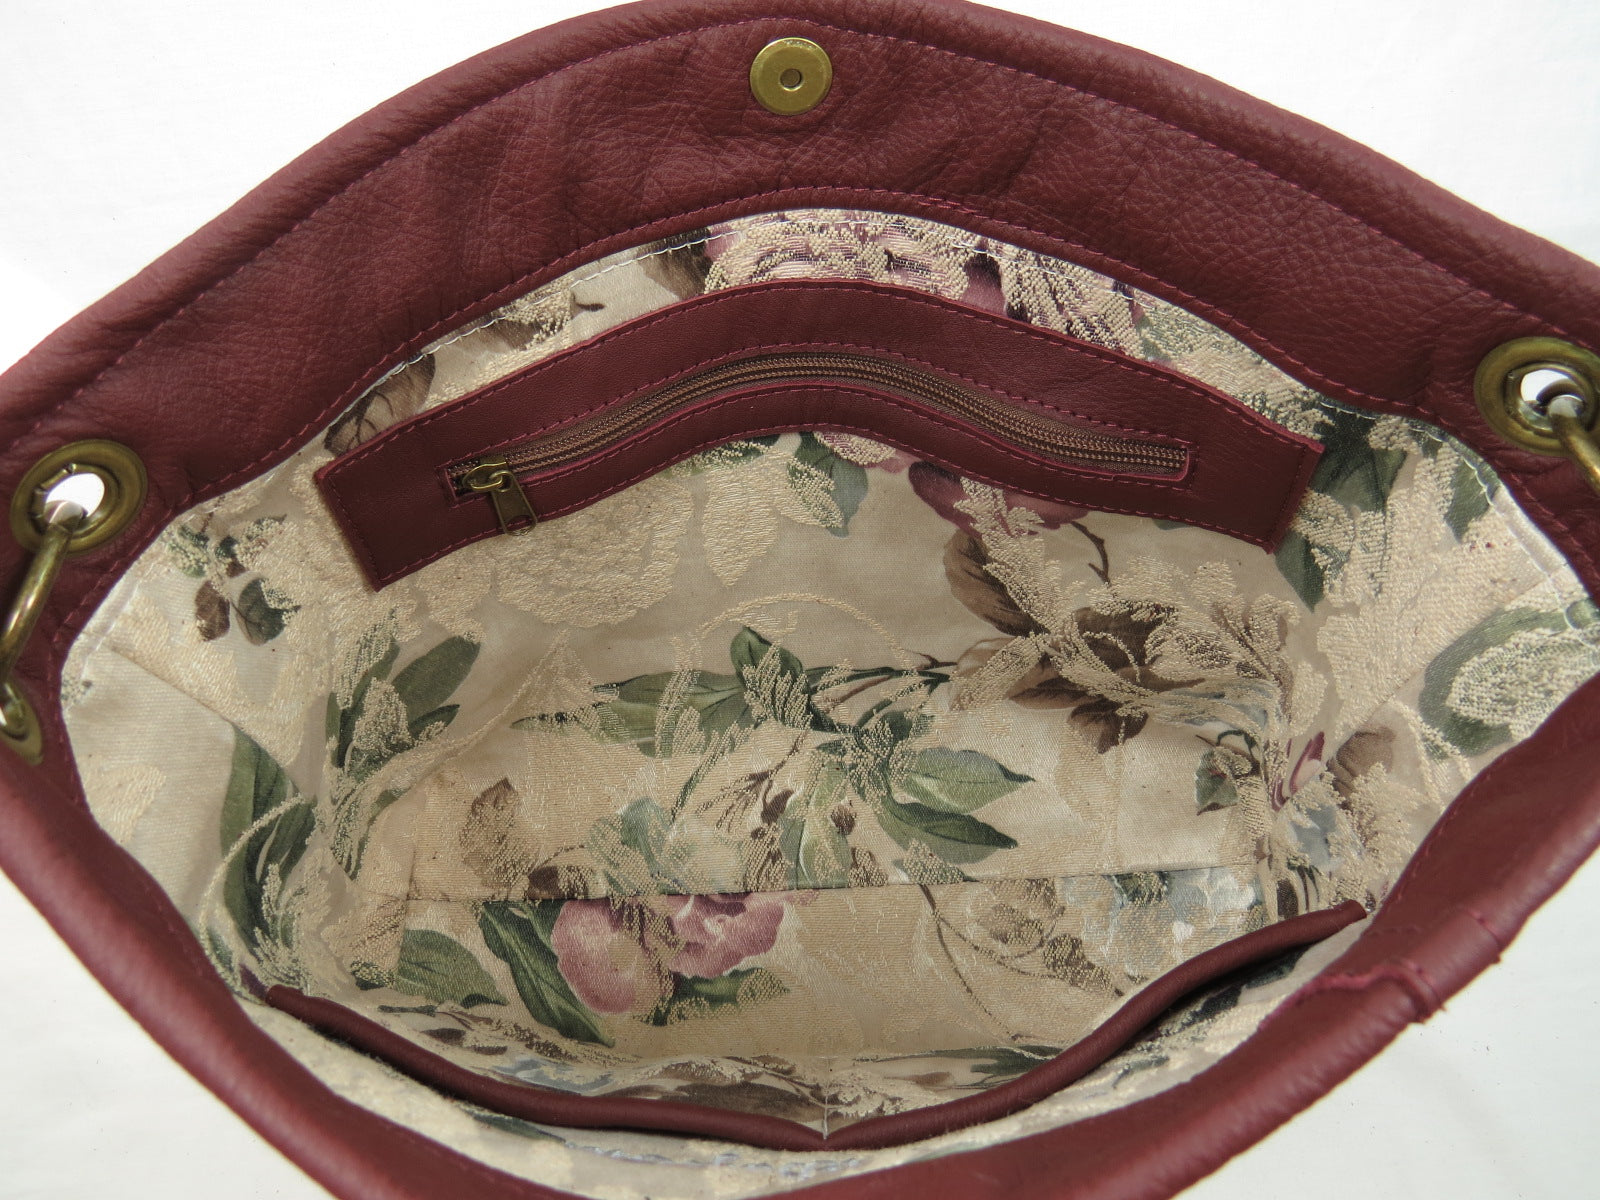 Burgundy Slouchy Hobo Leather Bag interior zipper pocket